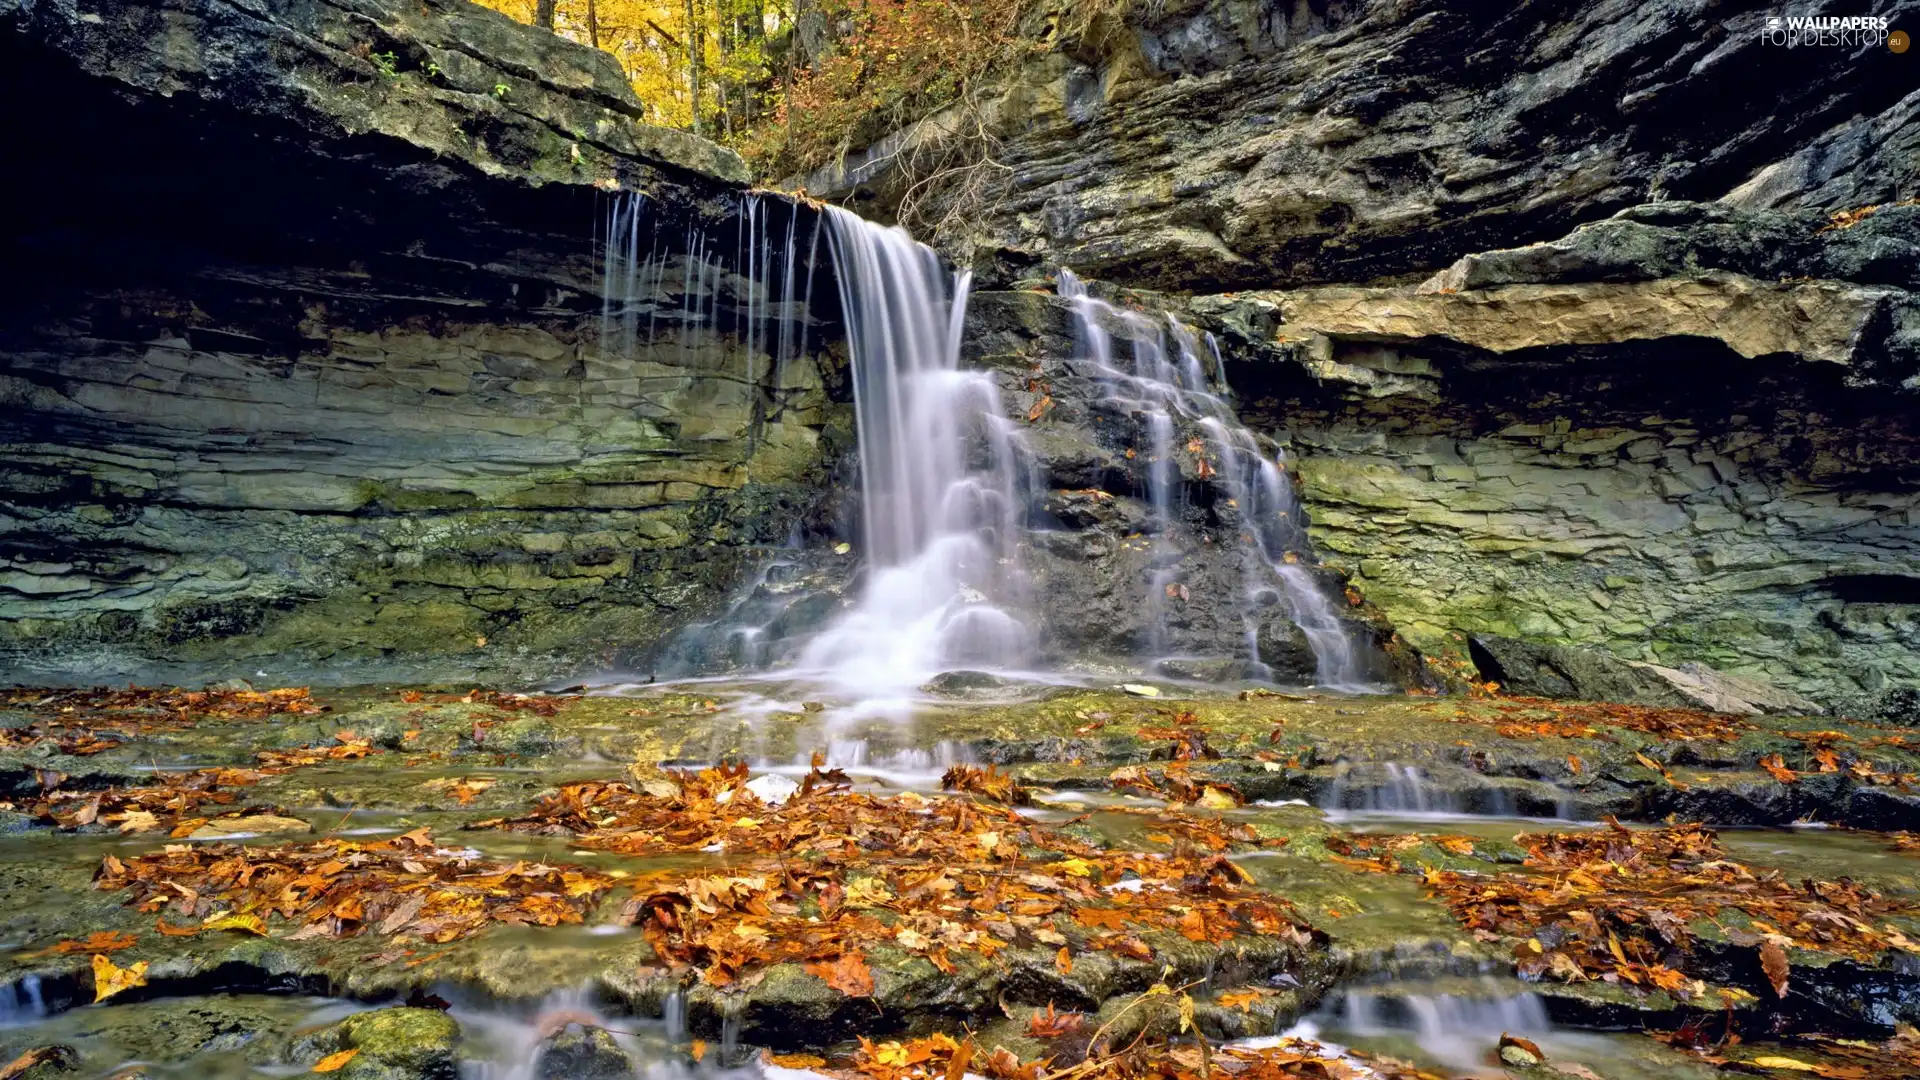 Leaf, autumn, rocks, forest, waterfall